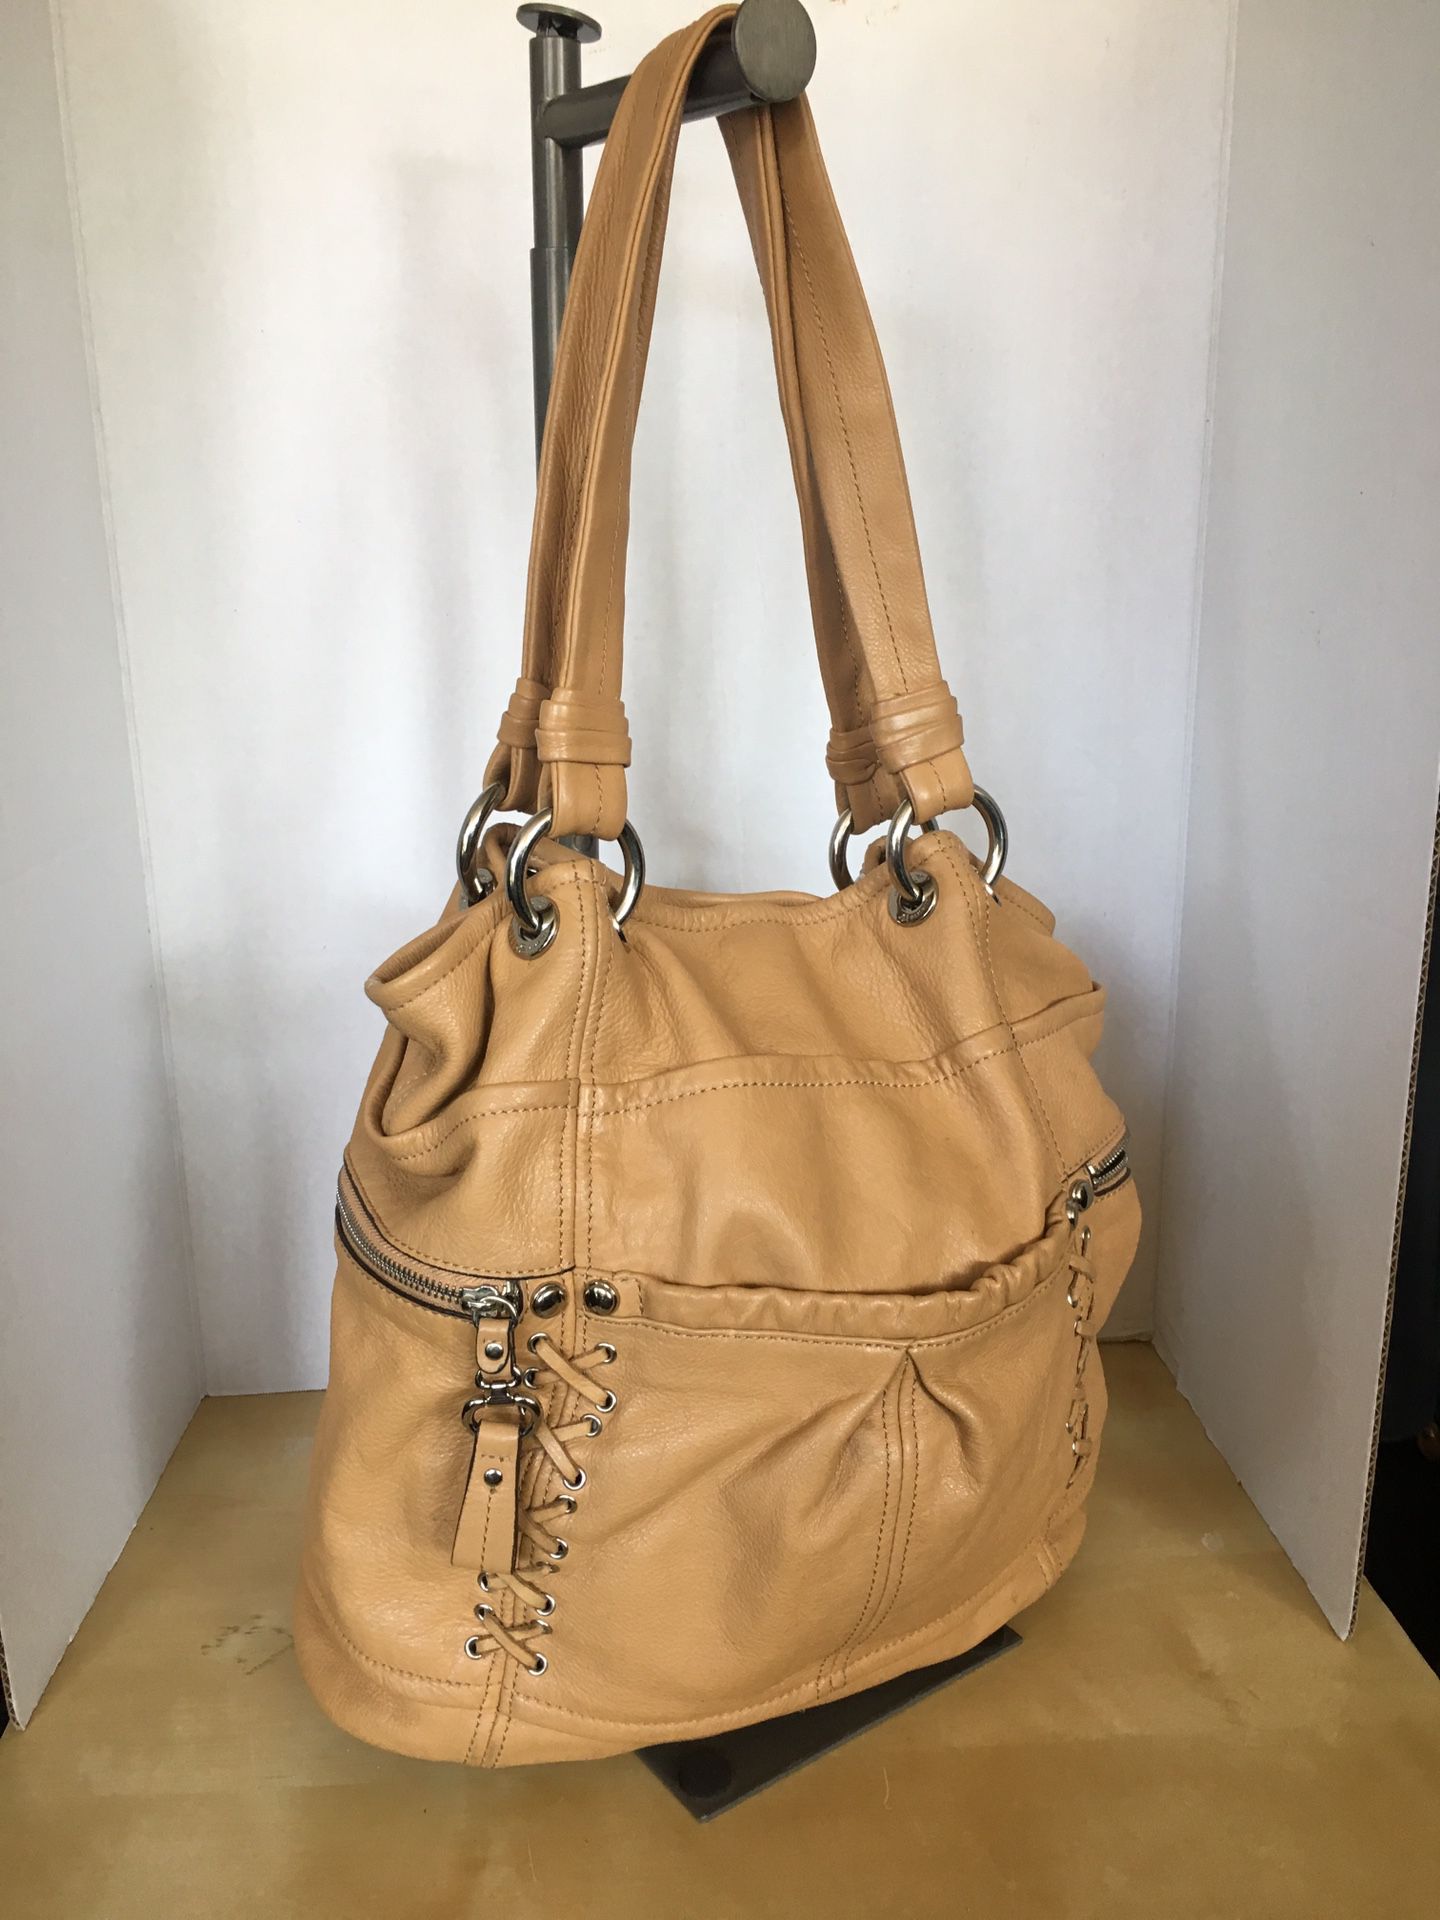 B Makowsky genuine leather tote bag purse retails for $300